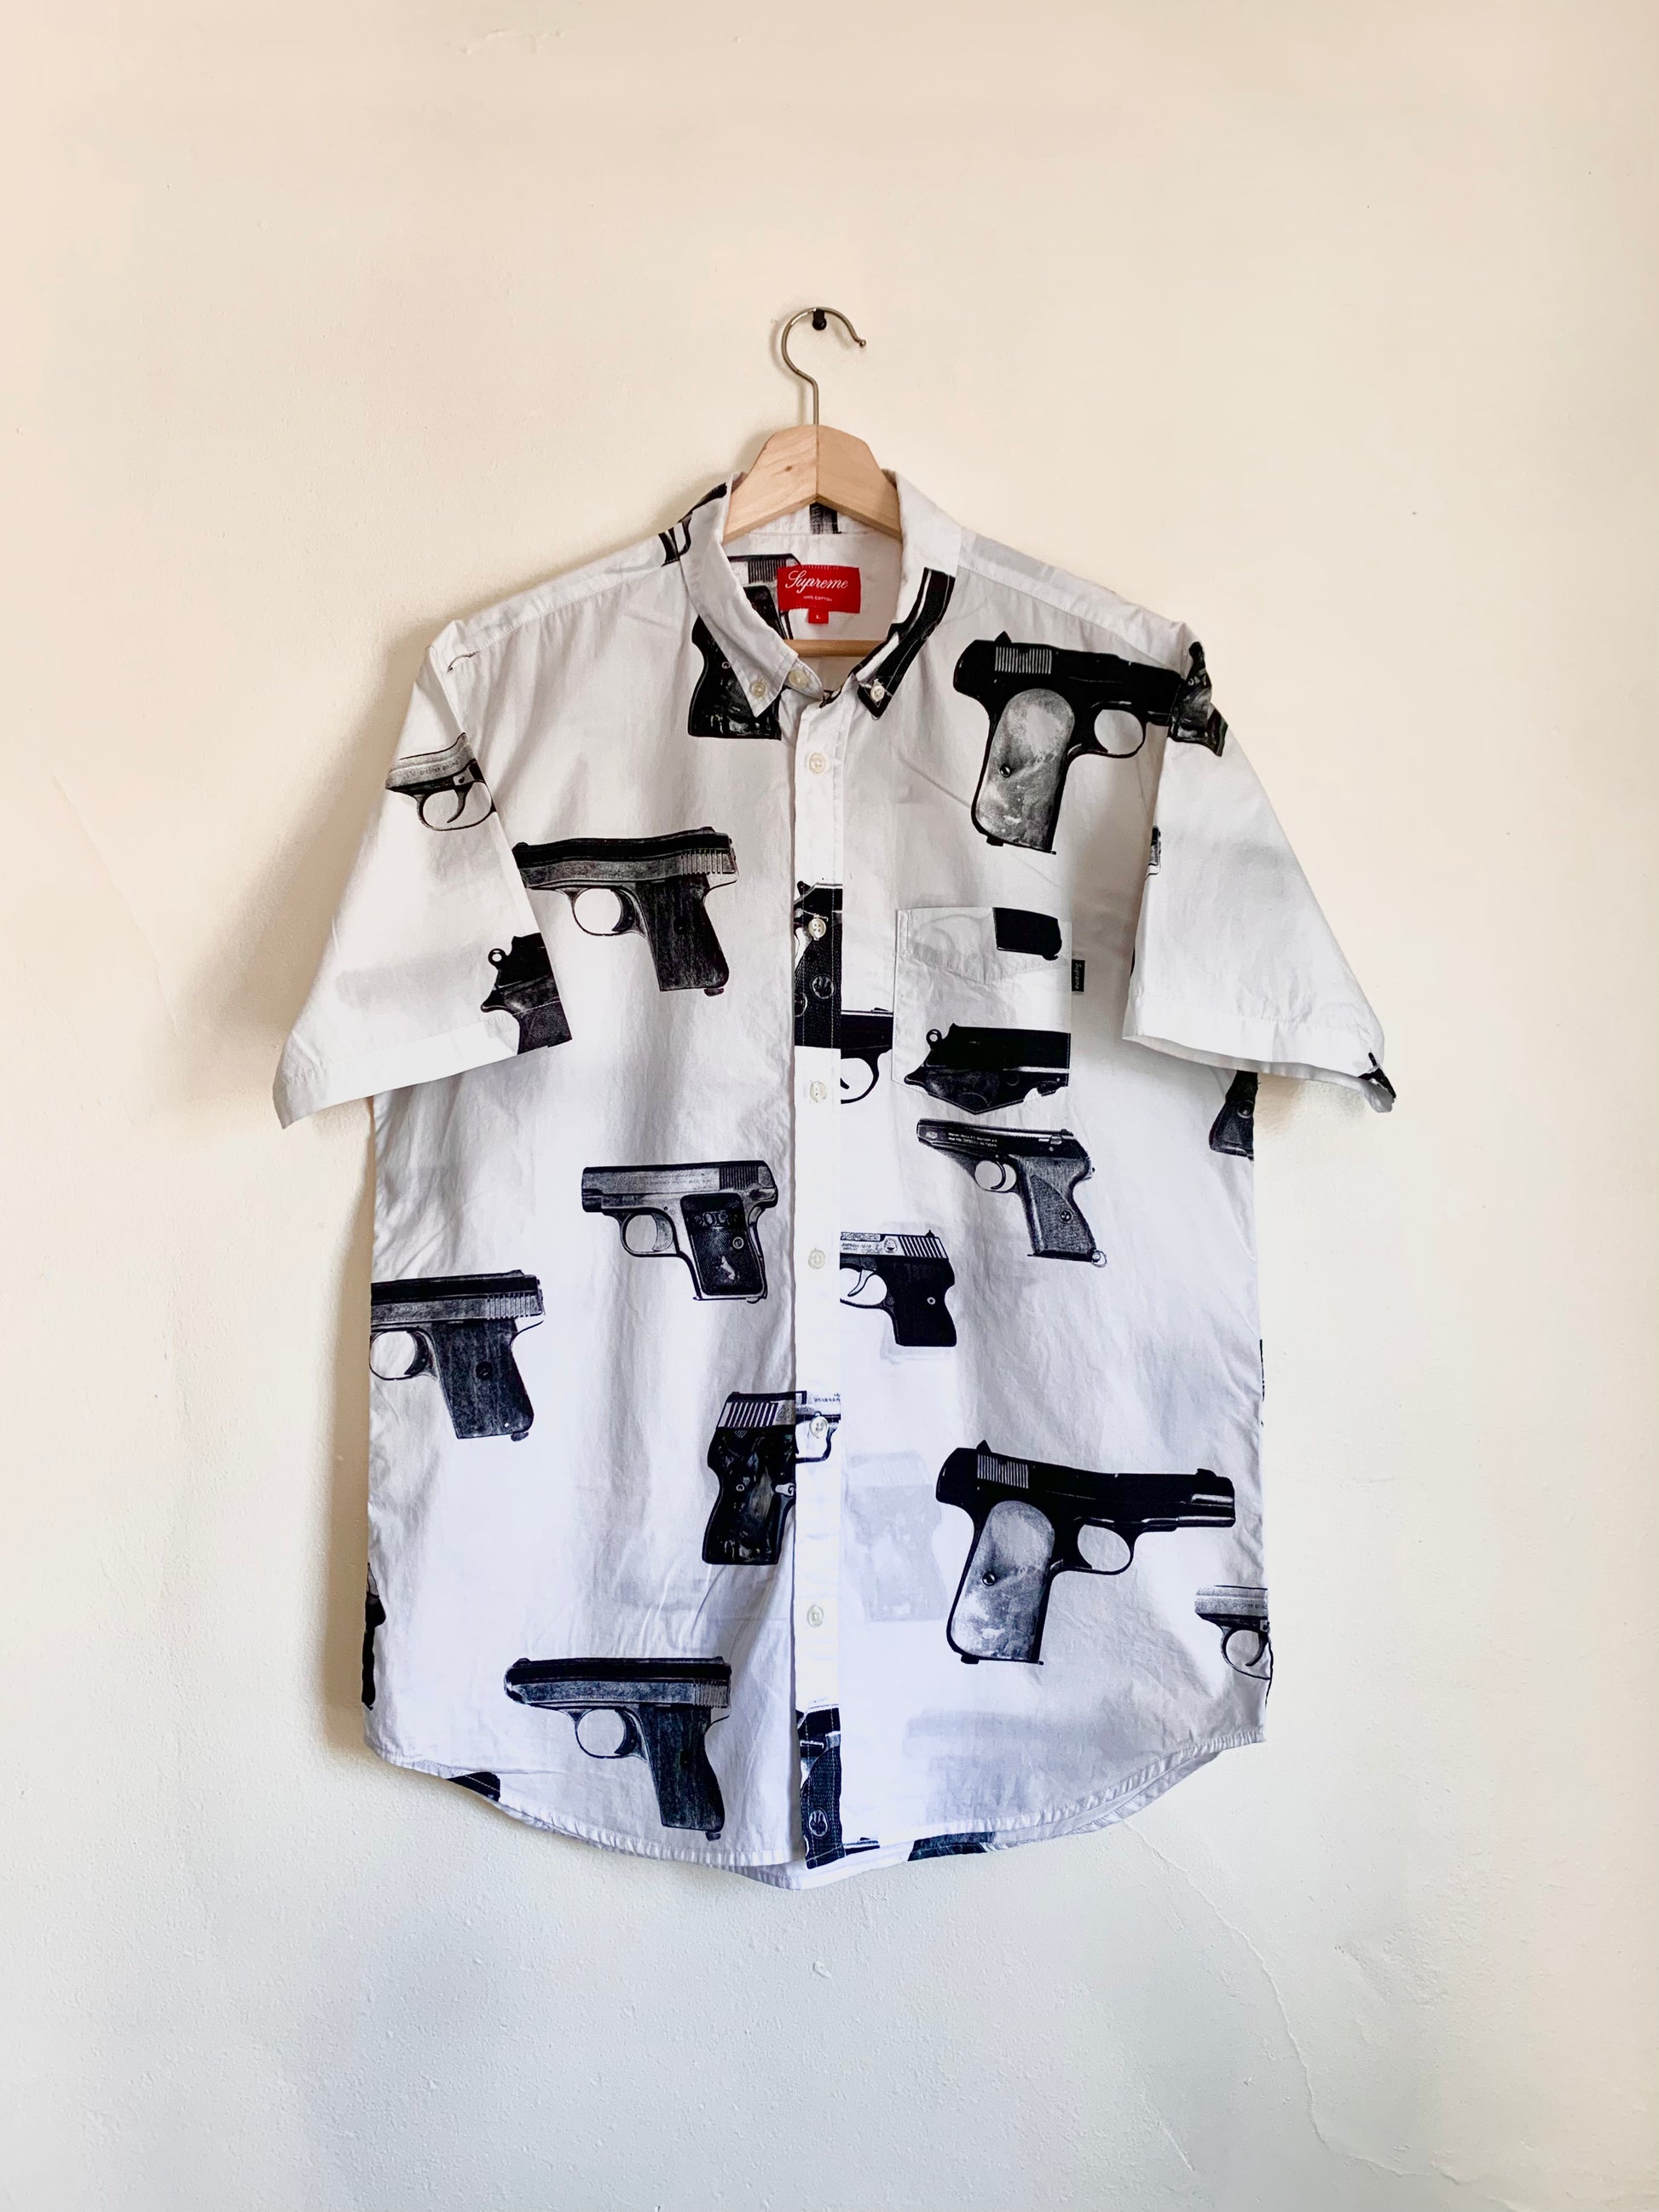 RUSHOLME - Supreme Guns Shirt (SS13) – Rusholme